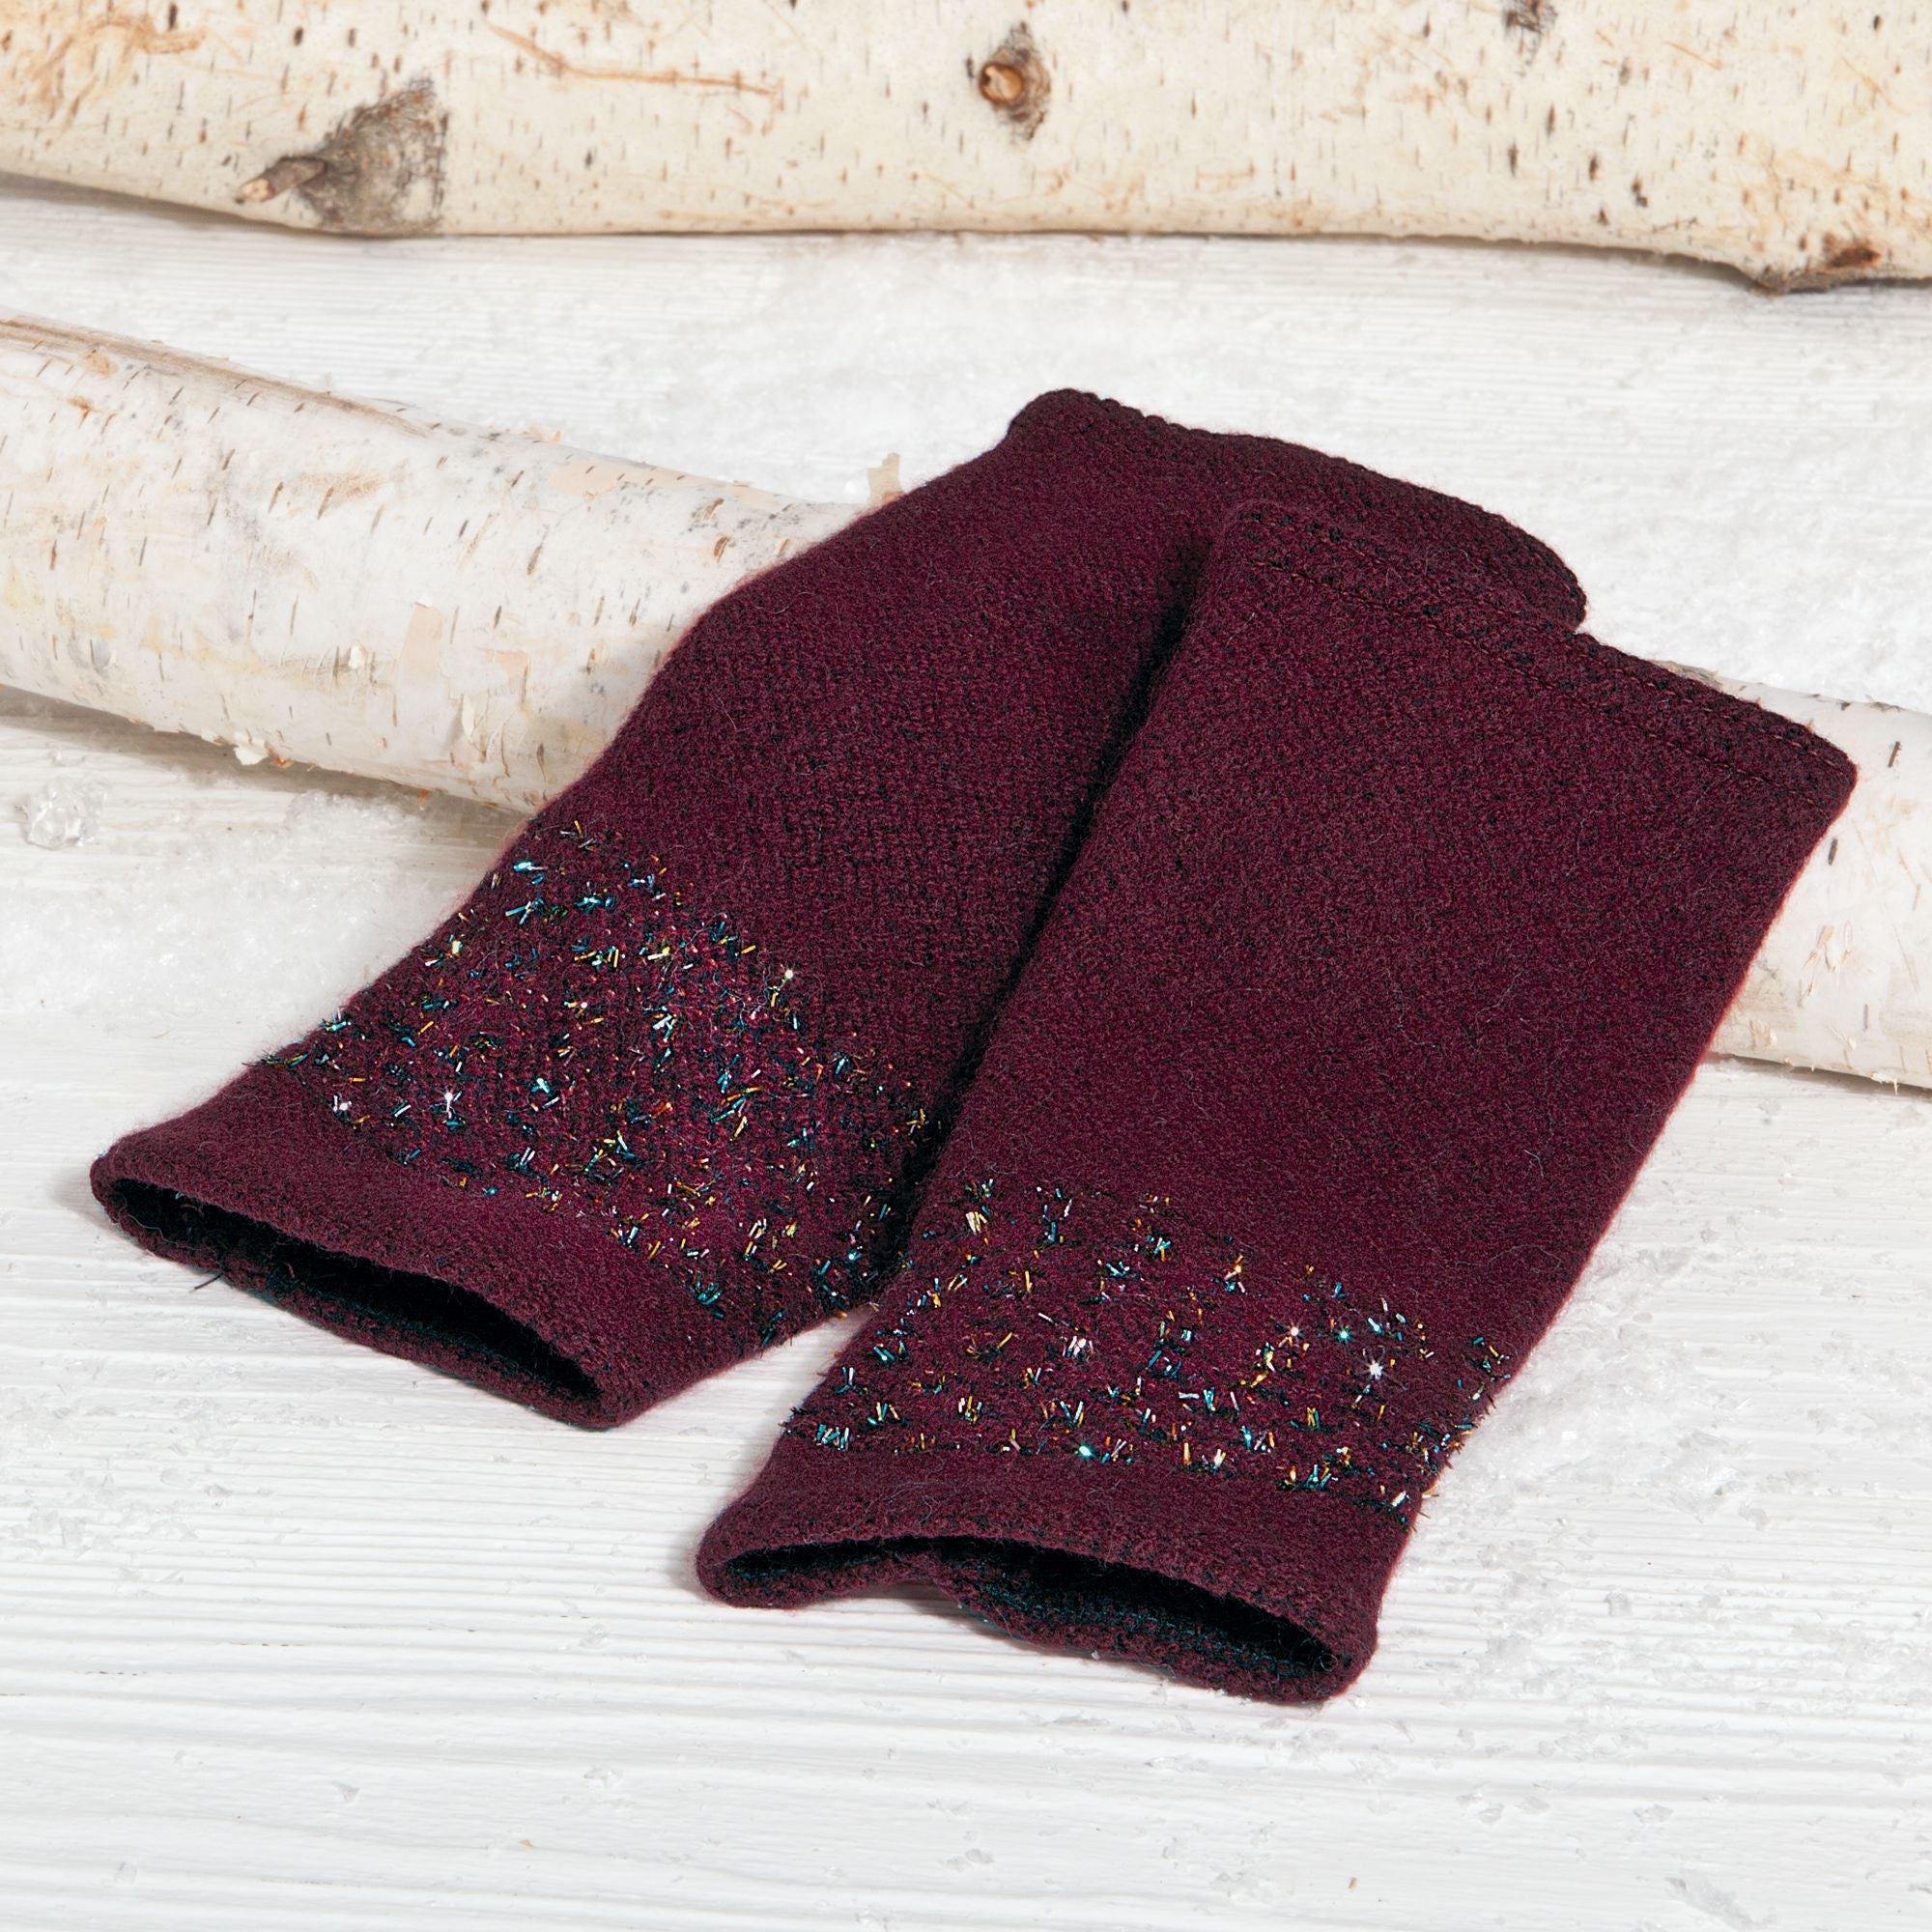 Shimmering Burgundy Winter Gloves Of France